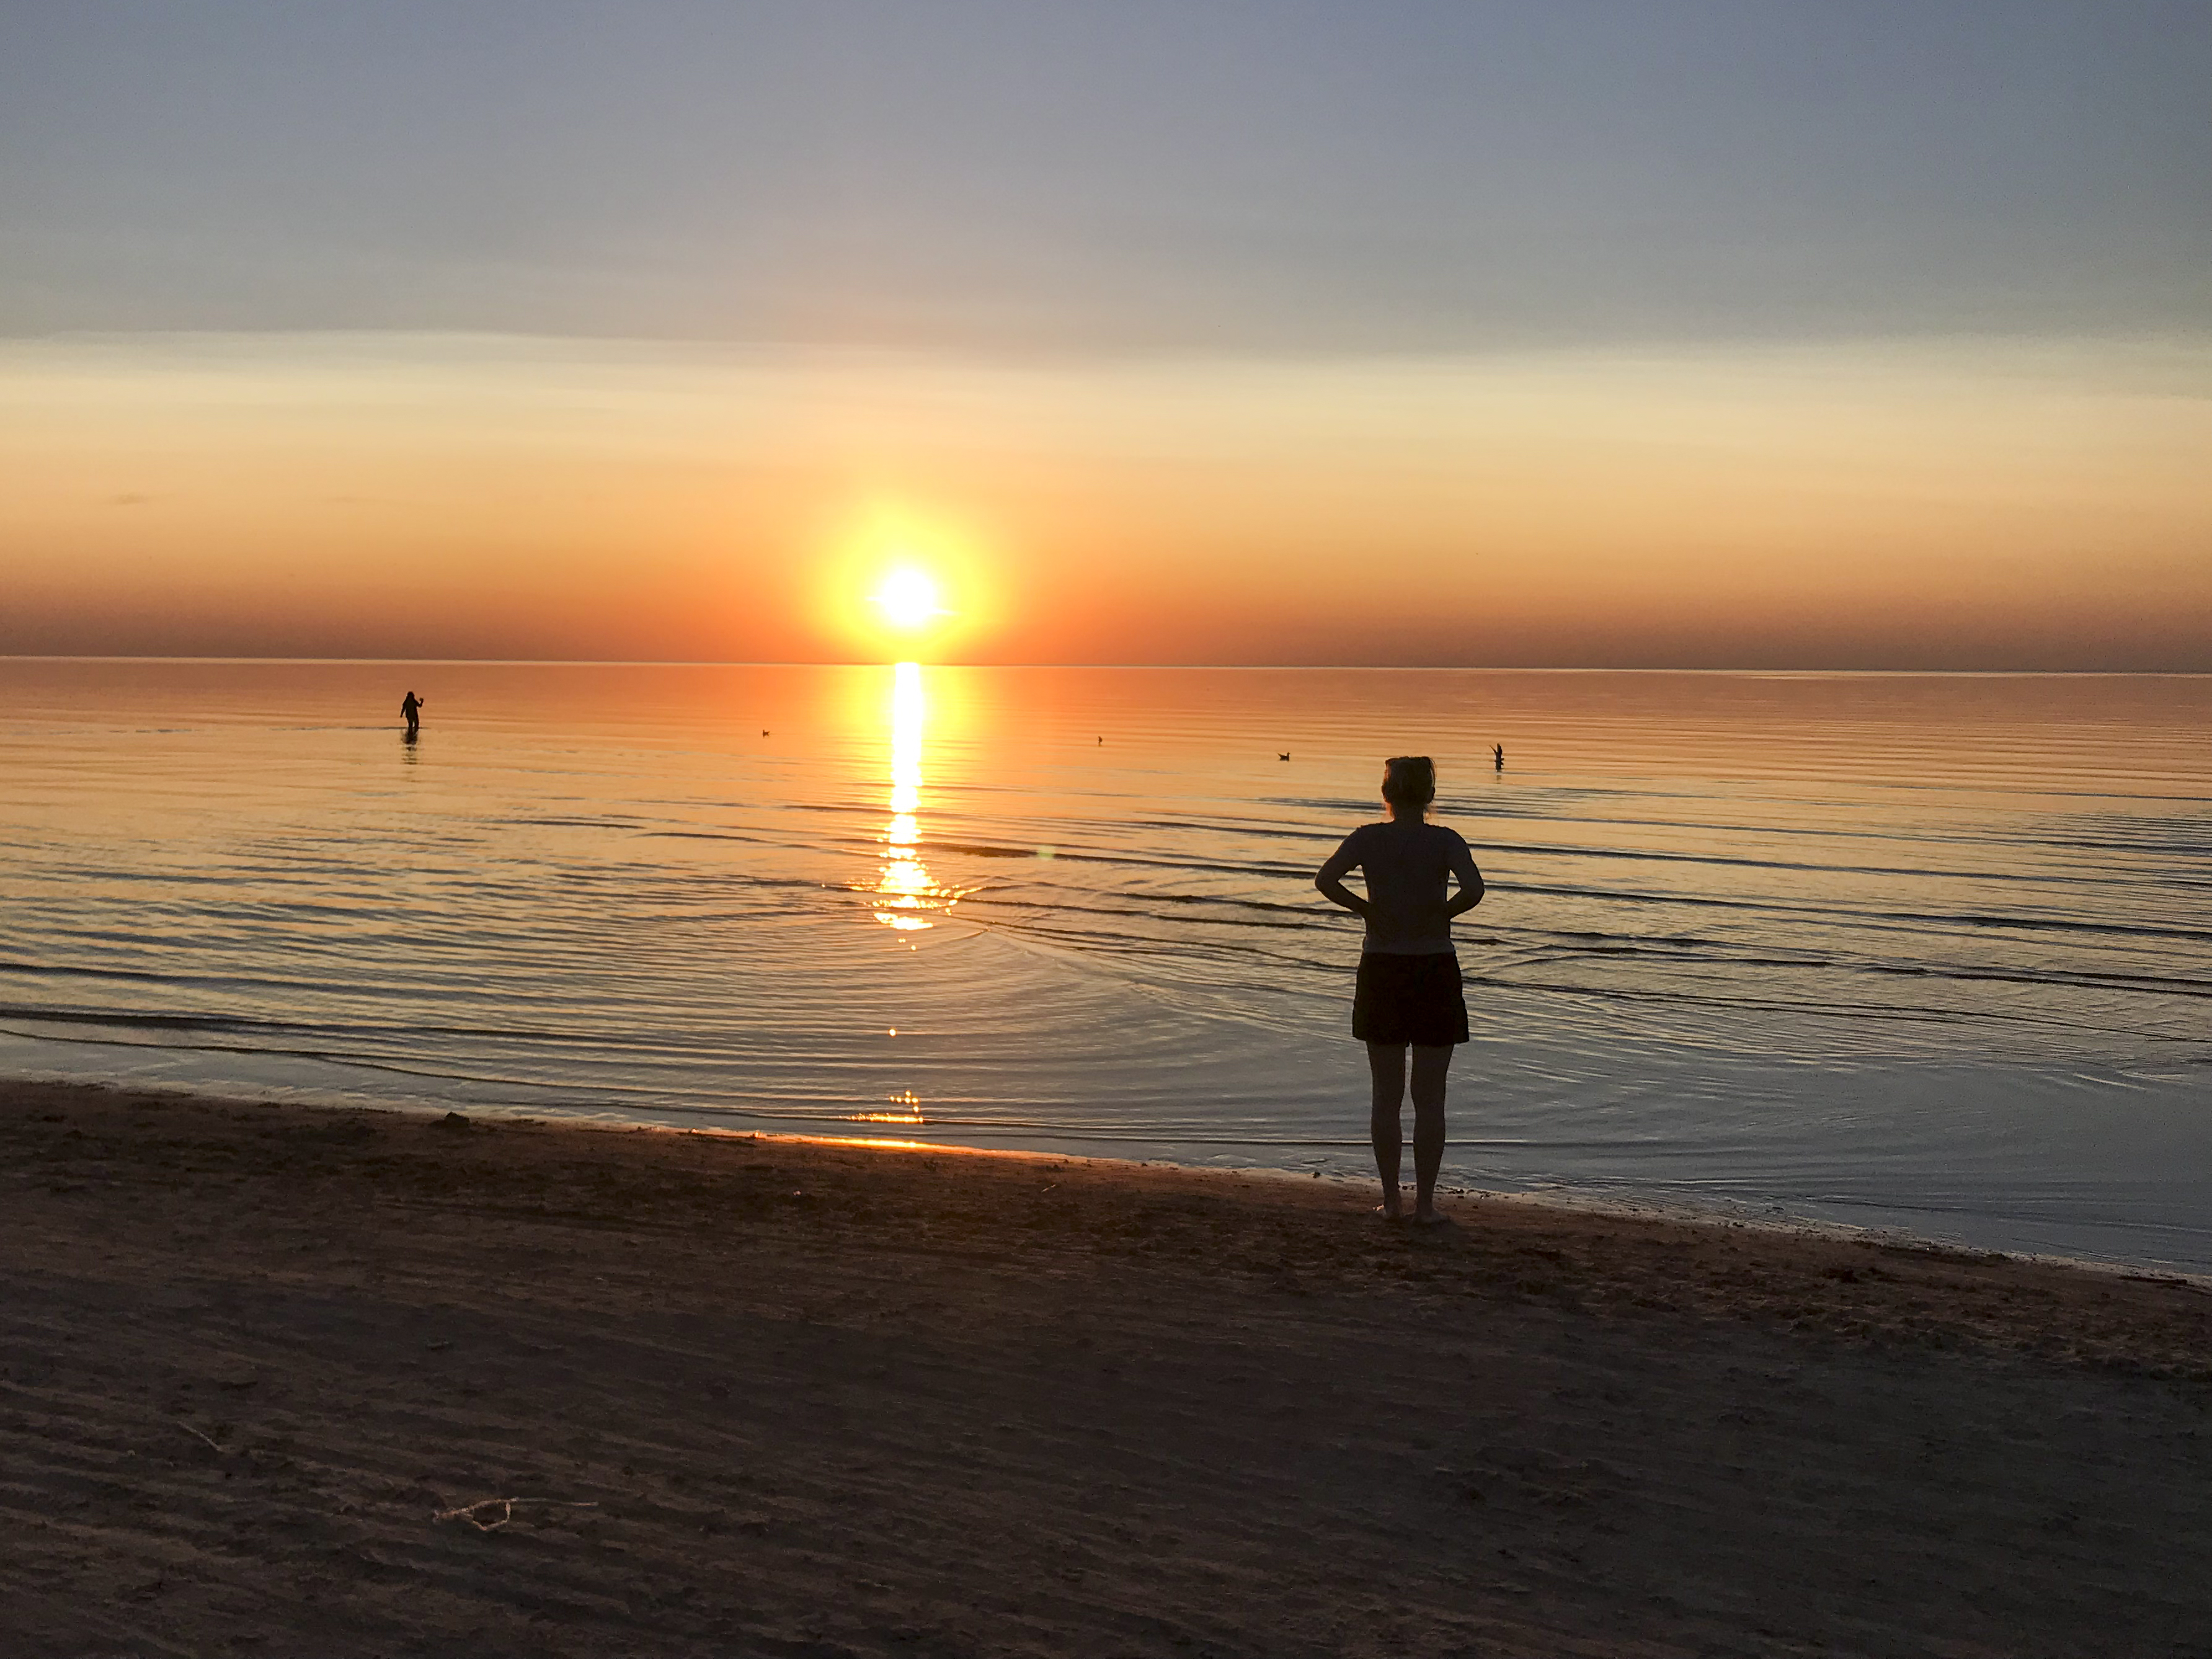 Frau schaut in den Sonnenuntergang am Ostsee-Strand von Jurmala / Woman looking into the sunset at Jurmala Beach on the Baltic Sea, 4.6.2019, Foto: Robert B. Fishman